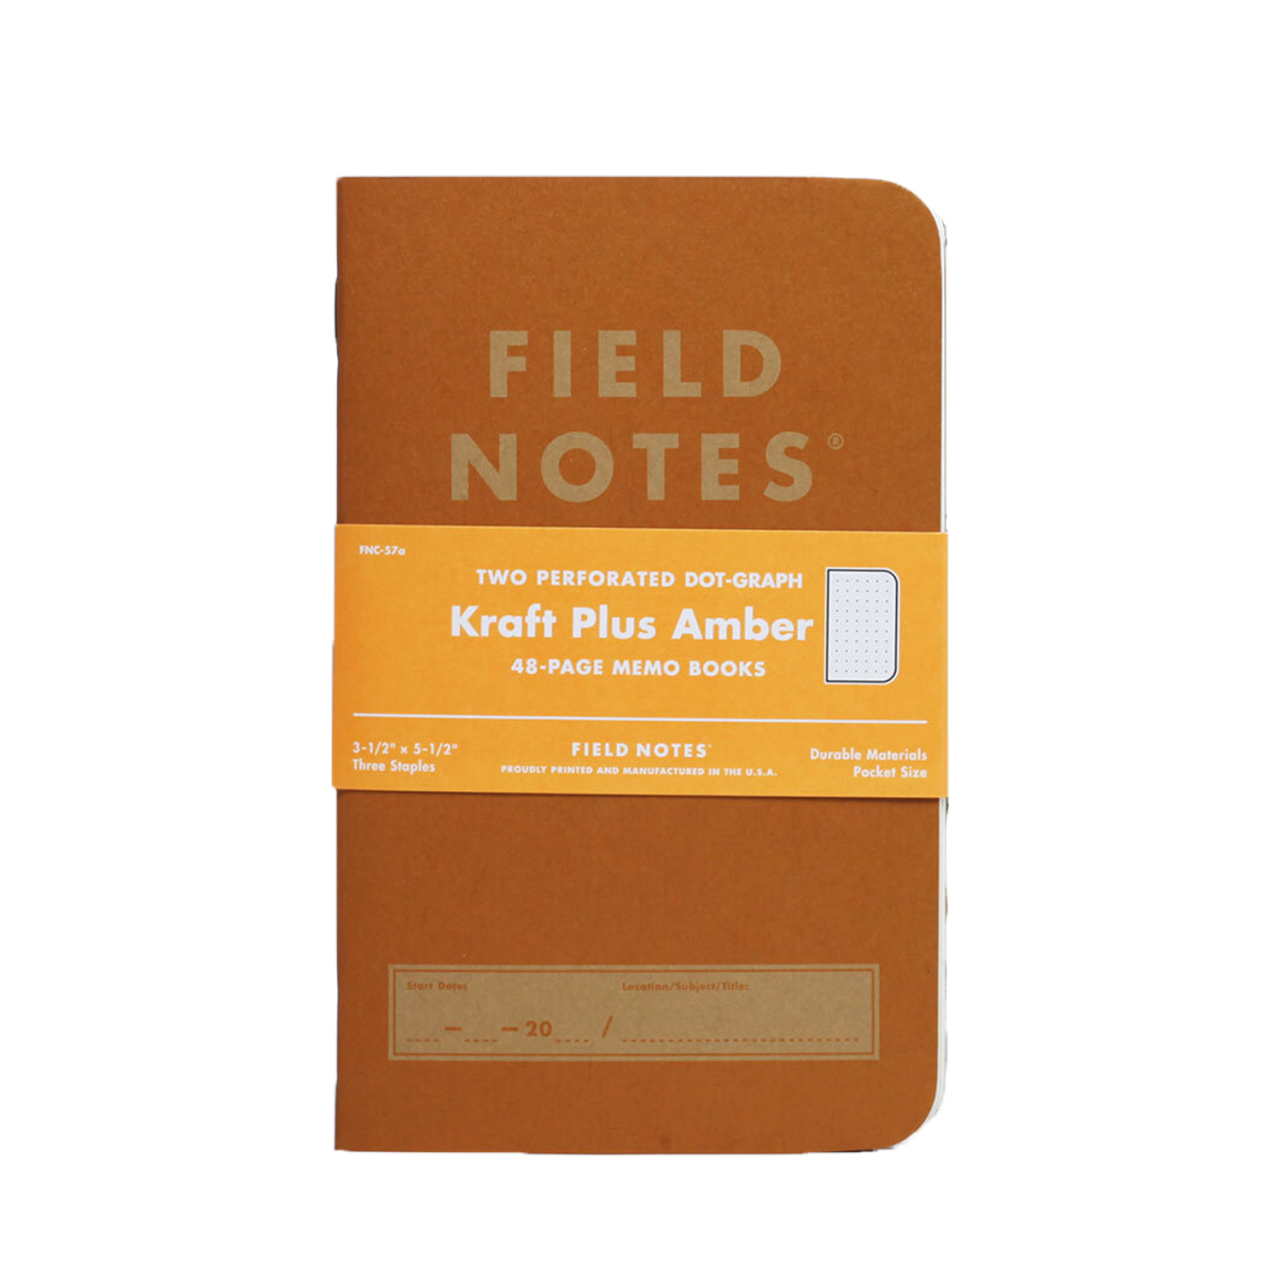 Field Notes 2-Pack “Kraft Plus Amber”